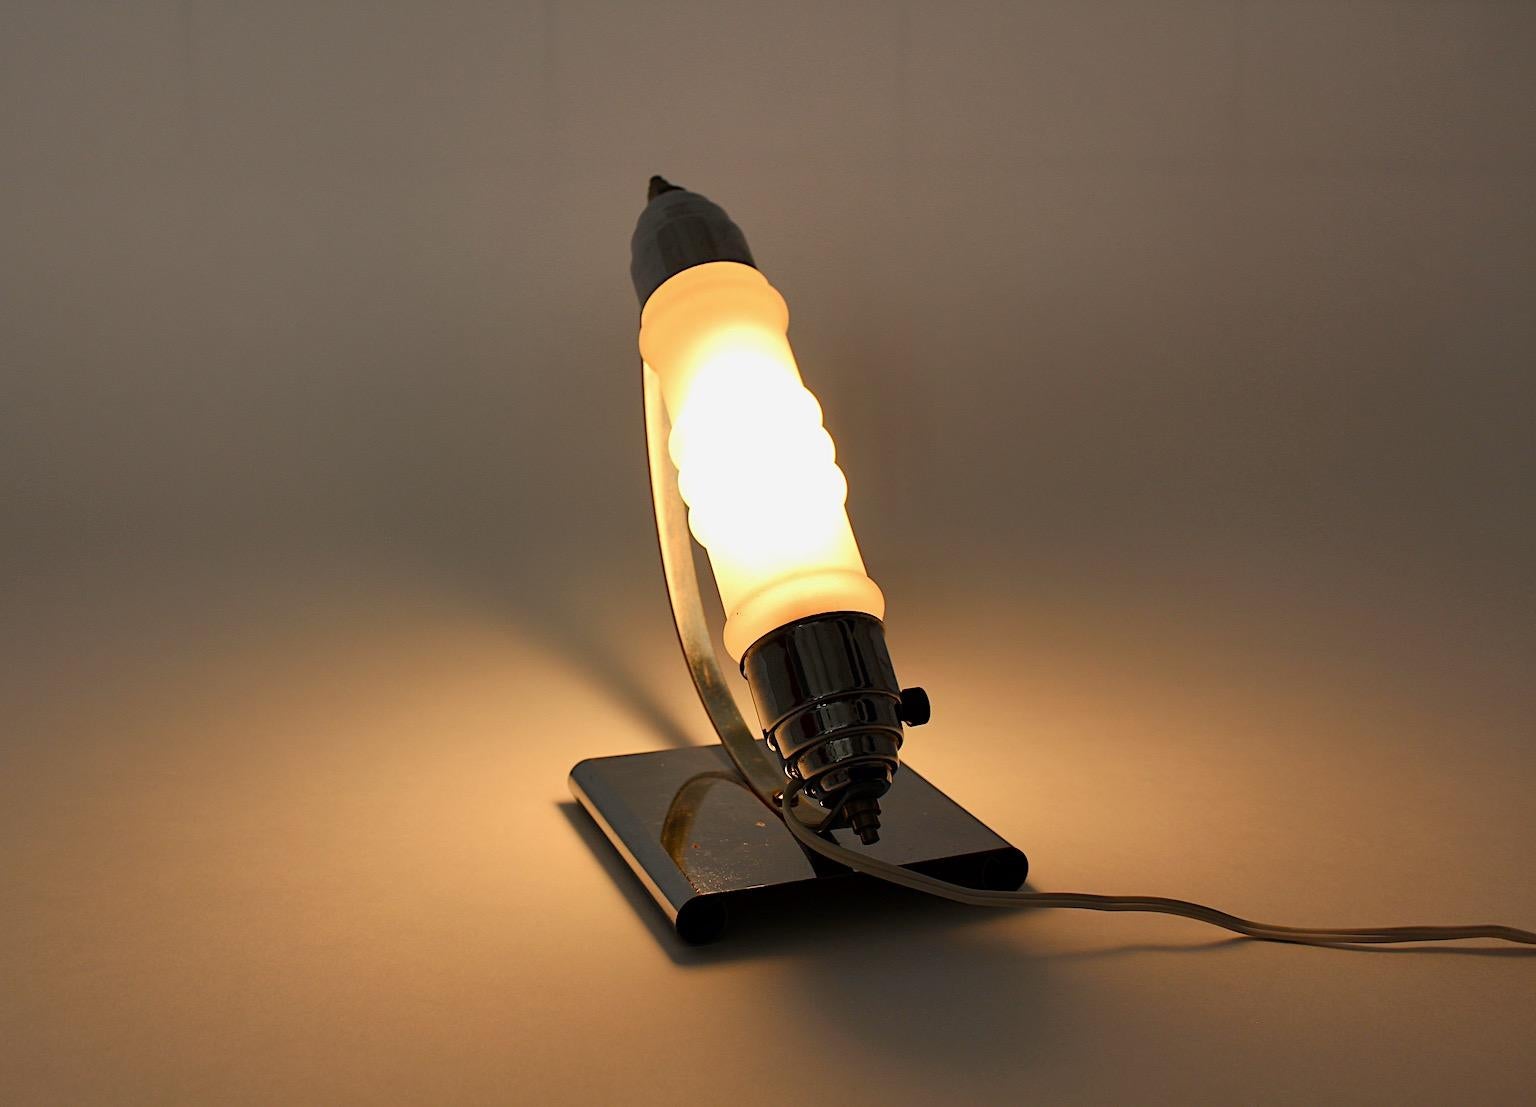 Mid-20th Century Streamline Moderne Art Deco Chromed Metal Vintage Table Lamp 1930 Czech Republic For Sale